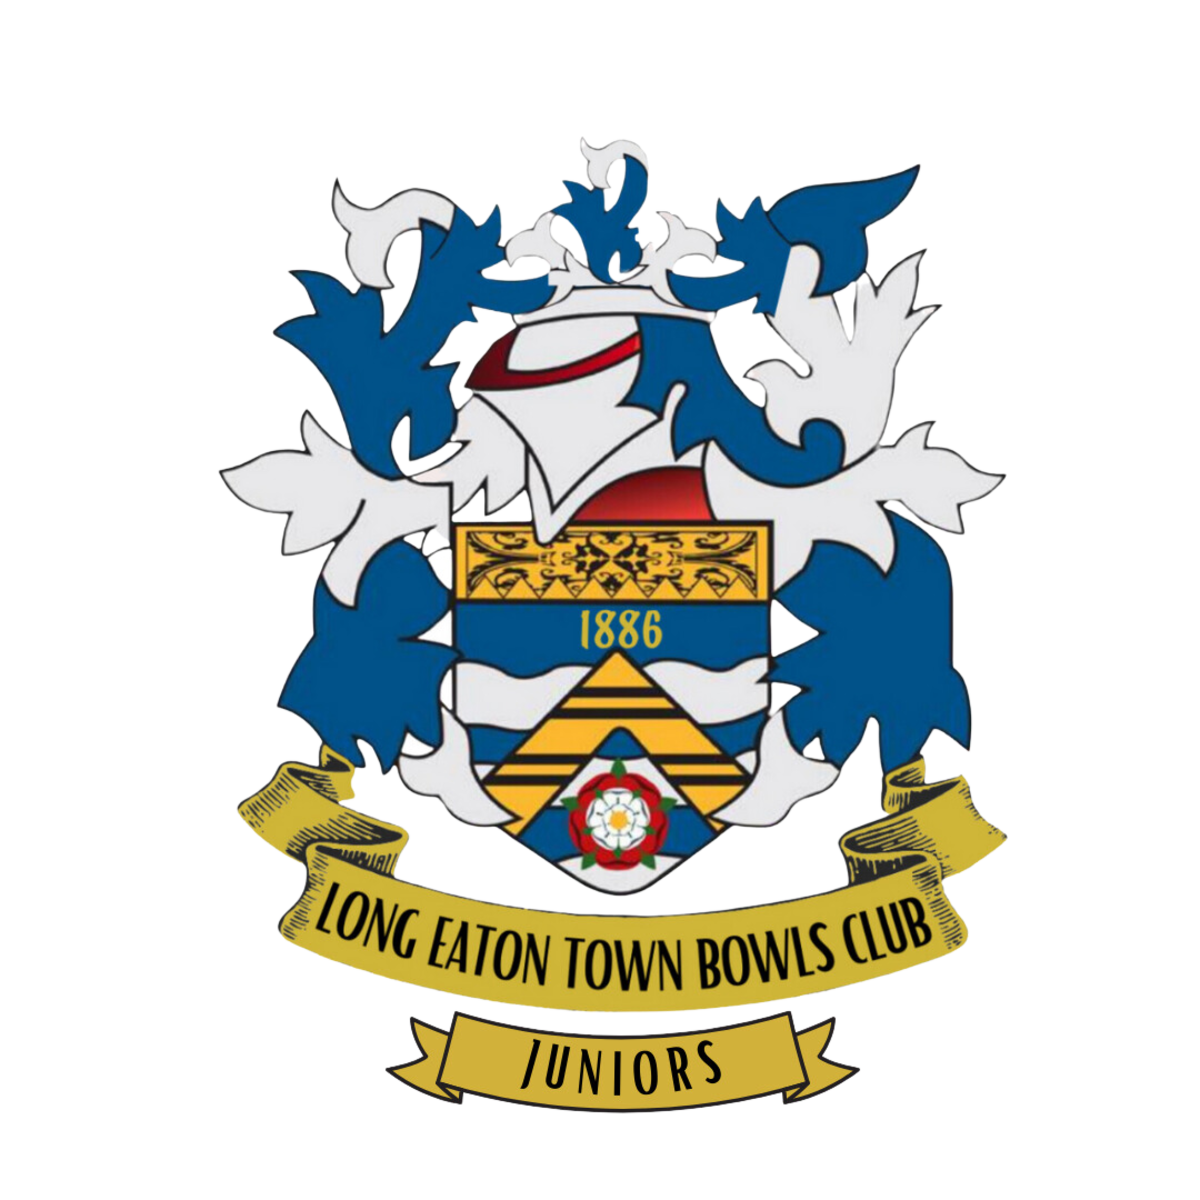 Long Eaton Town Bowls Club Juniors